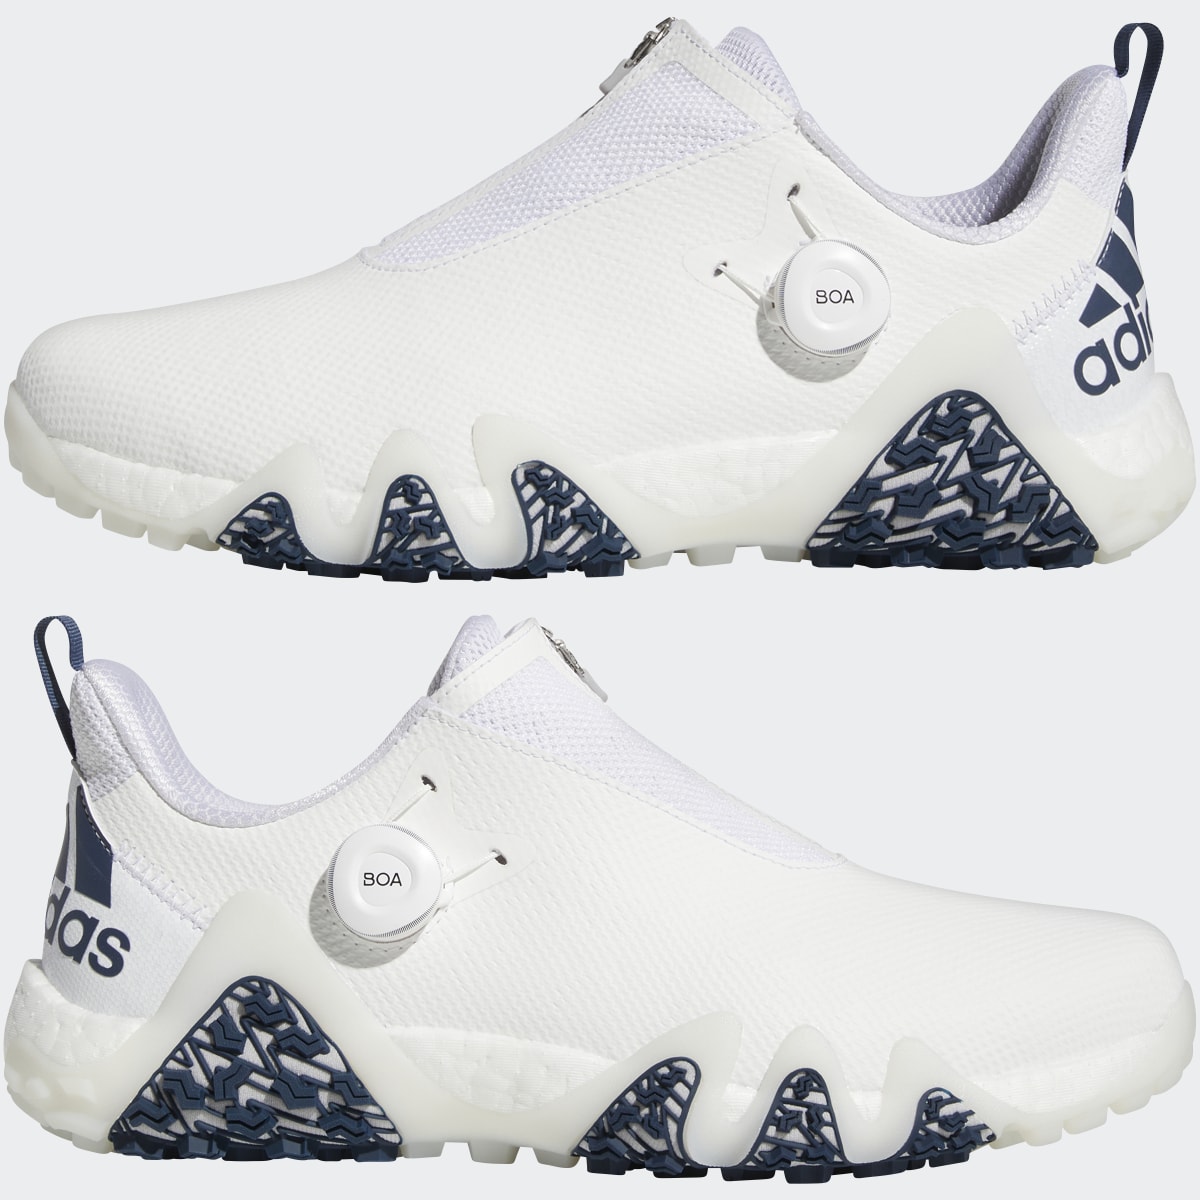 Adidas Codechaos 22 BOA Spikeless Golf Shoes. 8